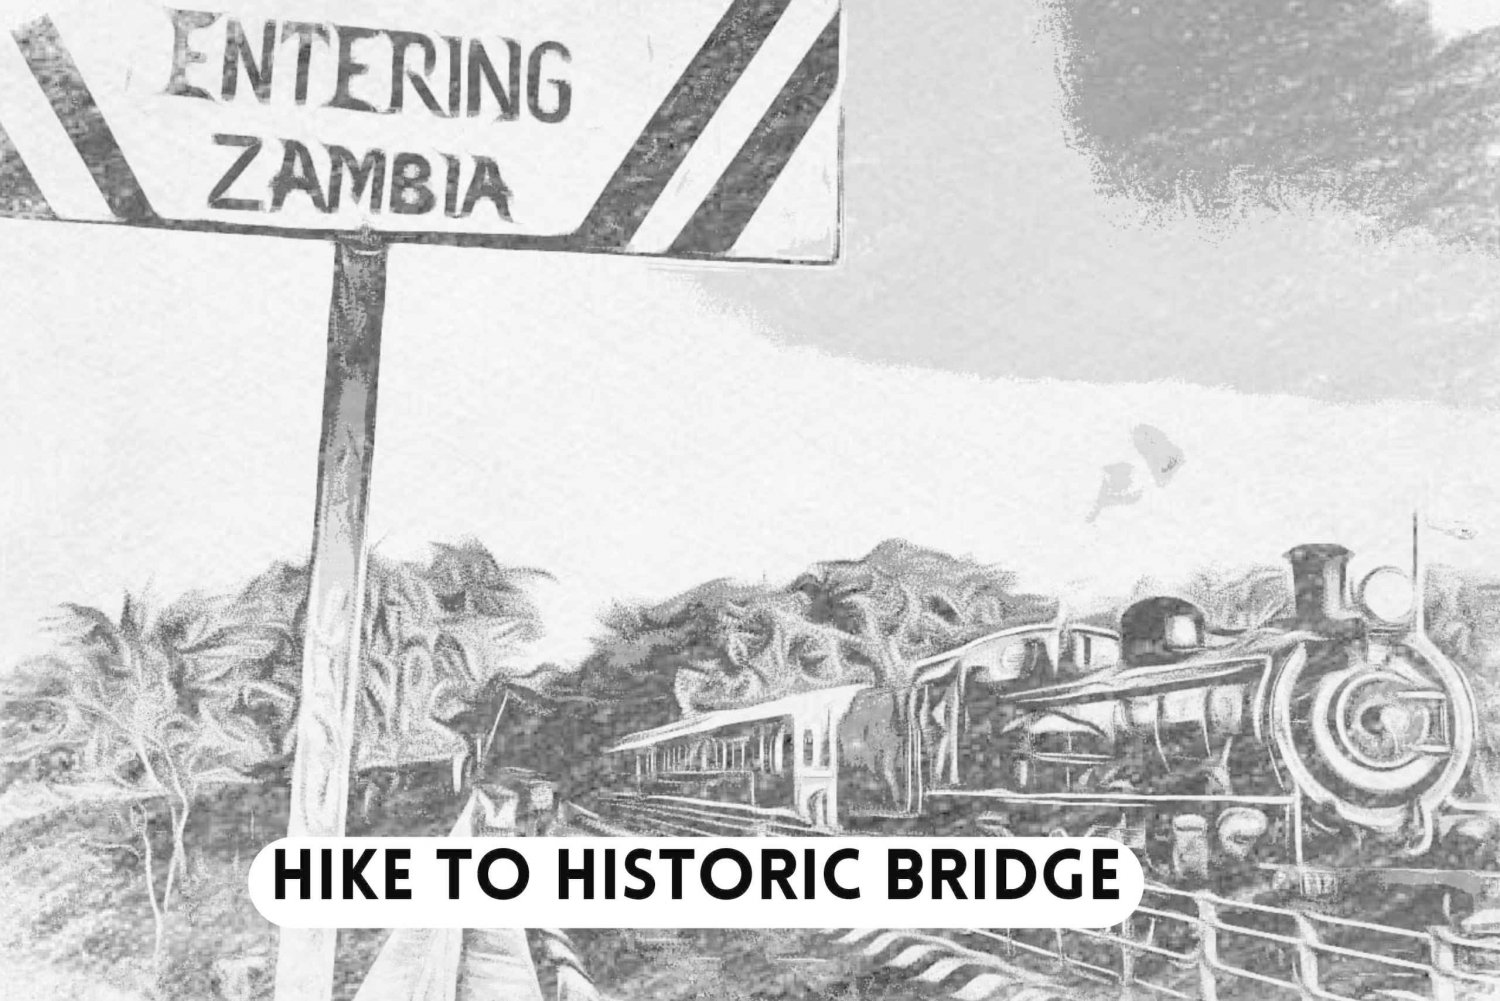 Victoria Falls: Hike to Historic Bridge